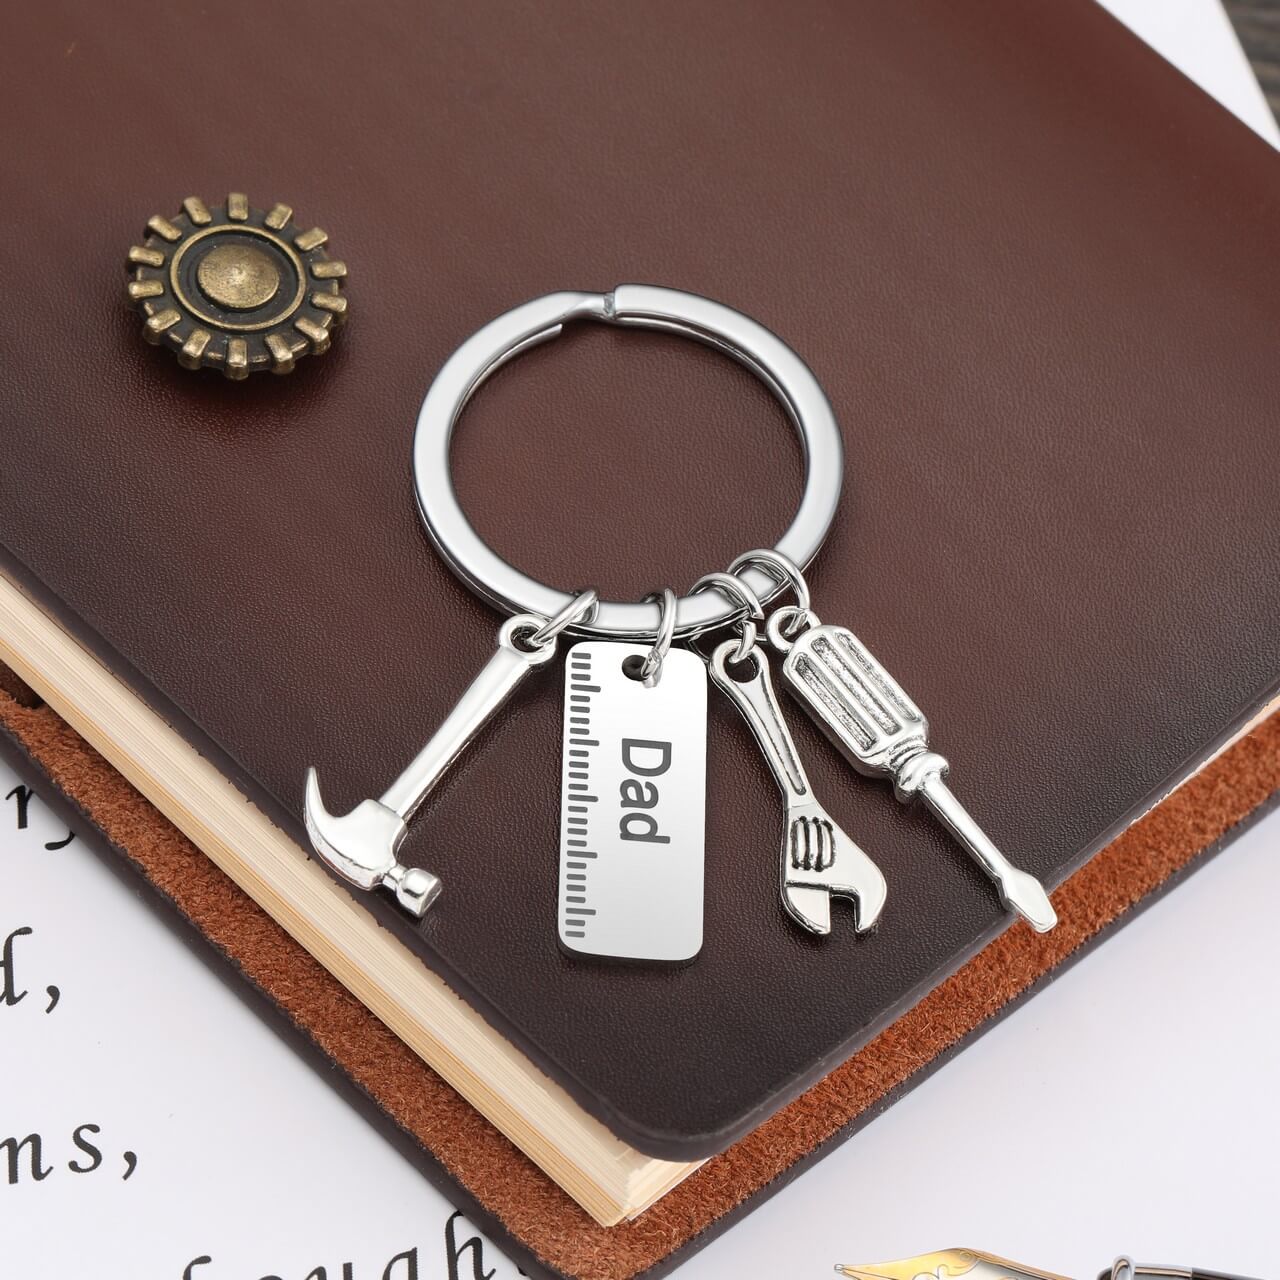 jovivi father's day gift keychain set, fld017501